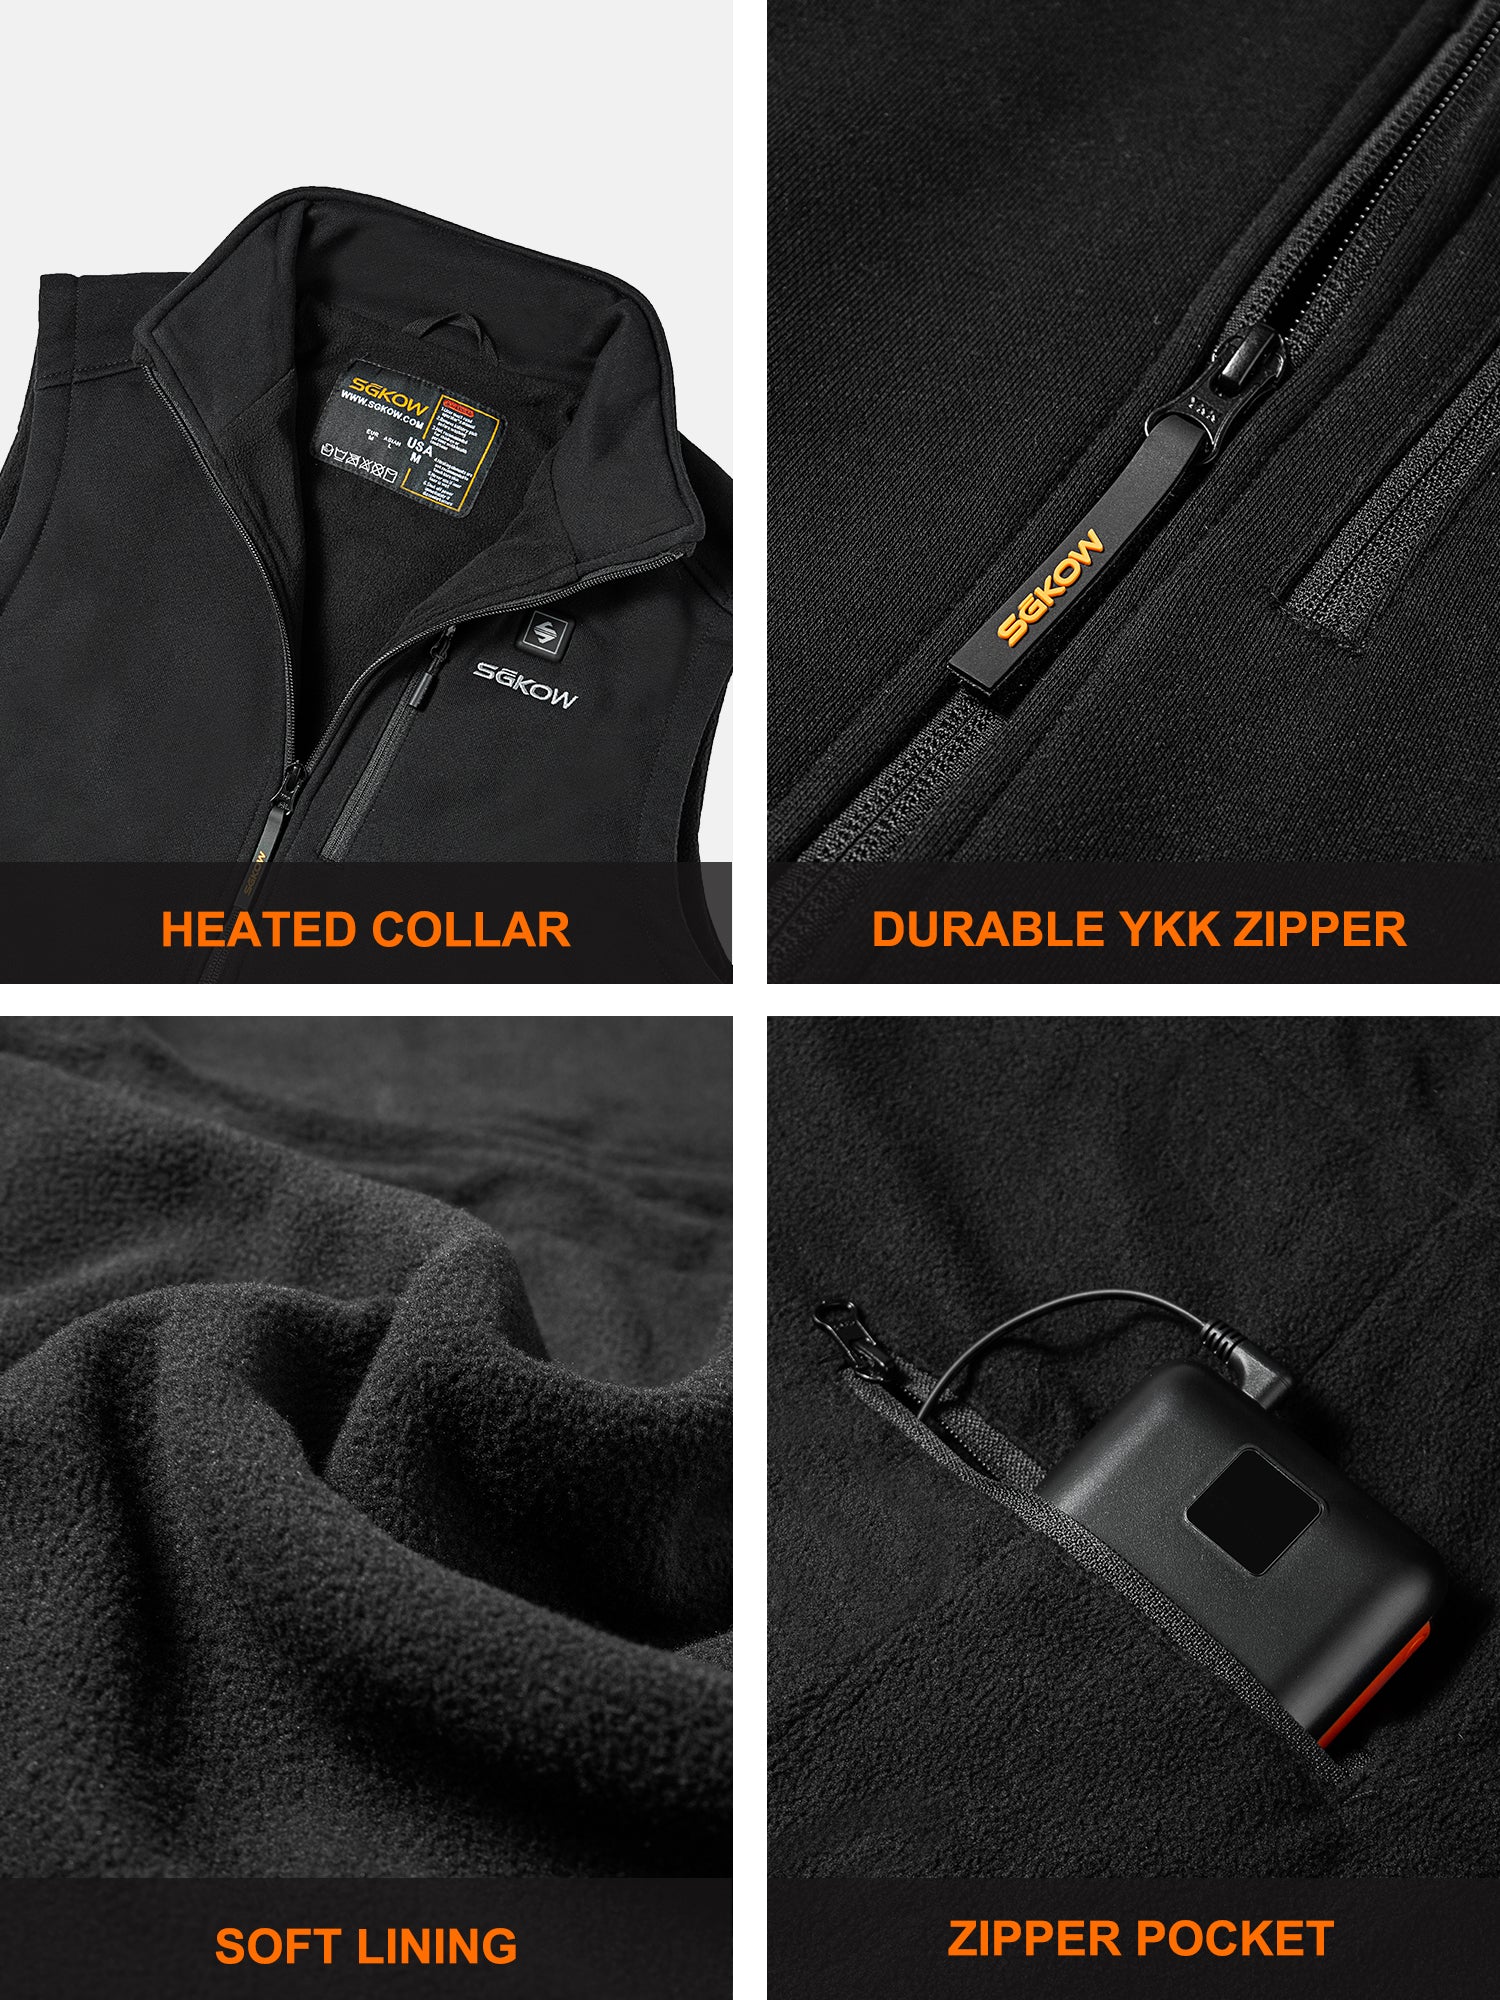 SGKOW Men's Heated Vest Battery, Rechargeable Heated Coat M3